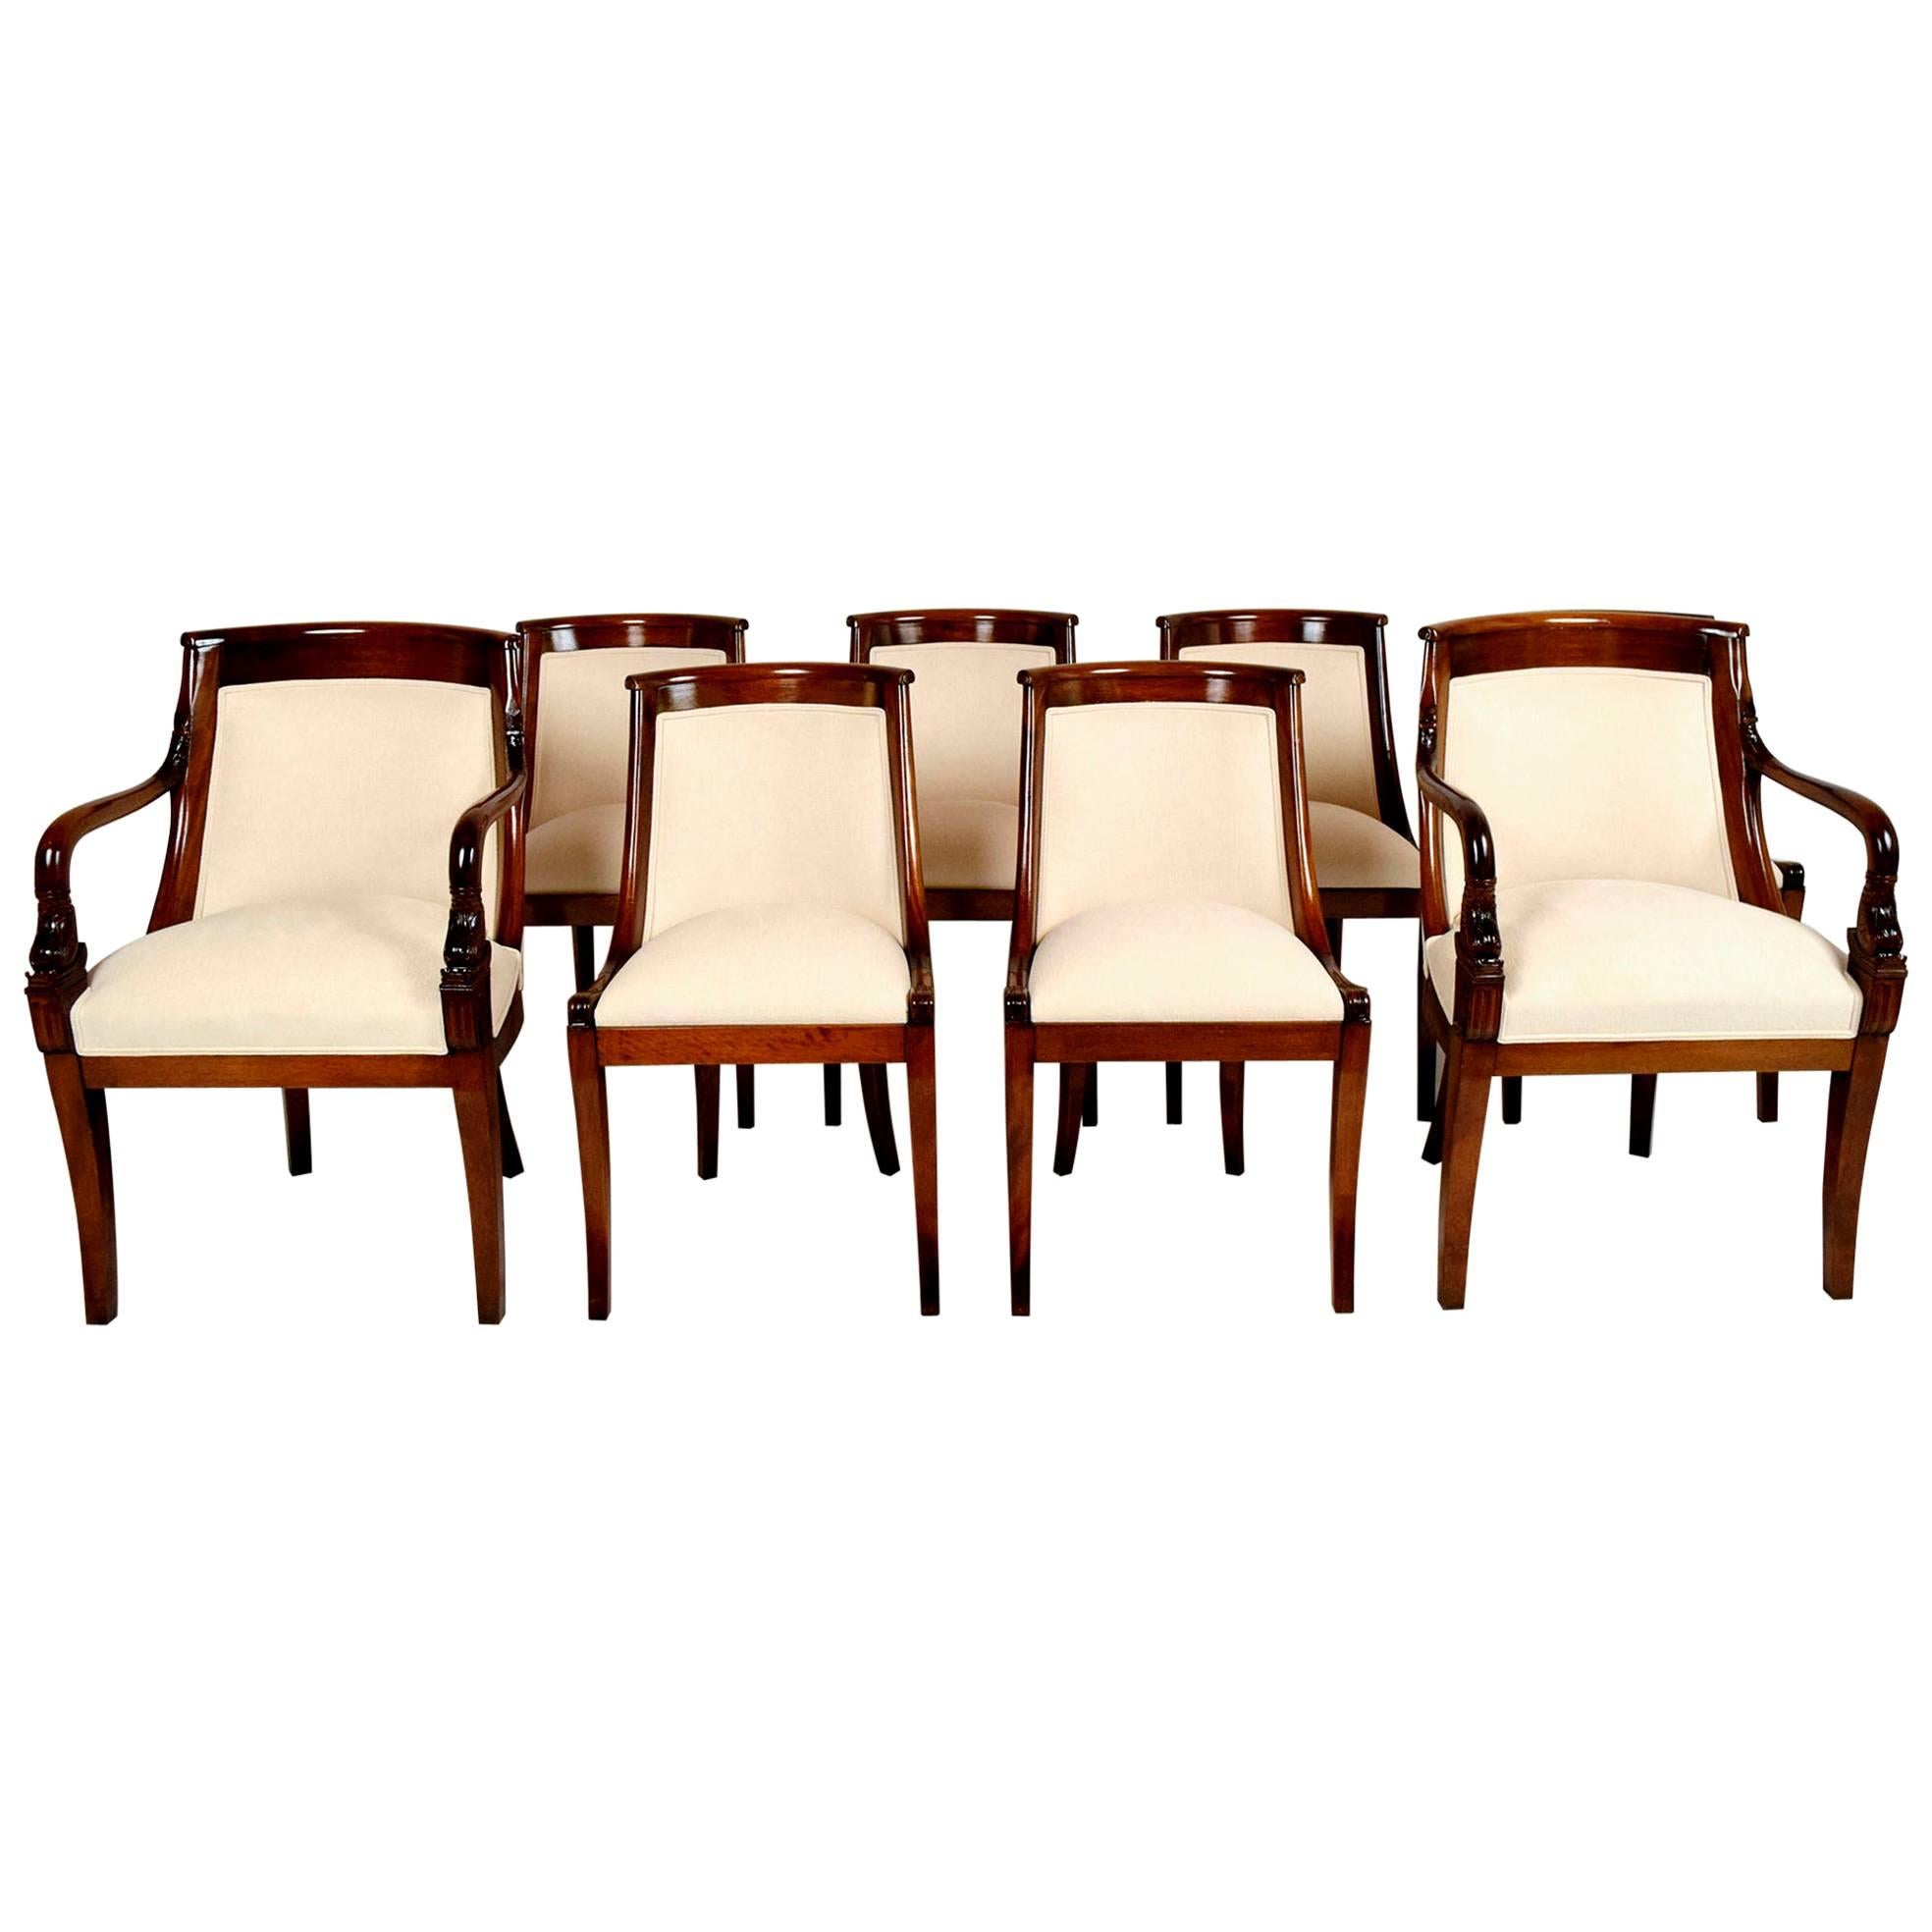 Set of 8 Mahogany Empire Dining Chairs